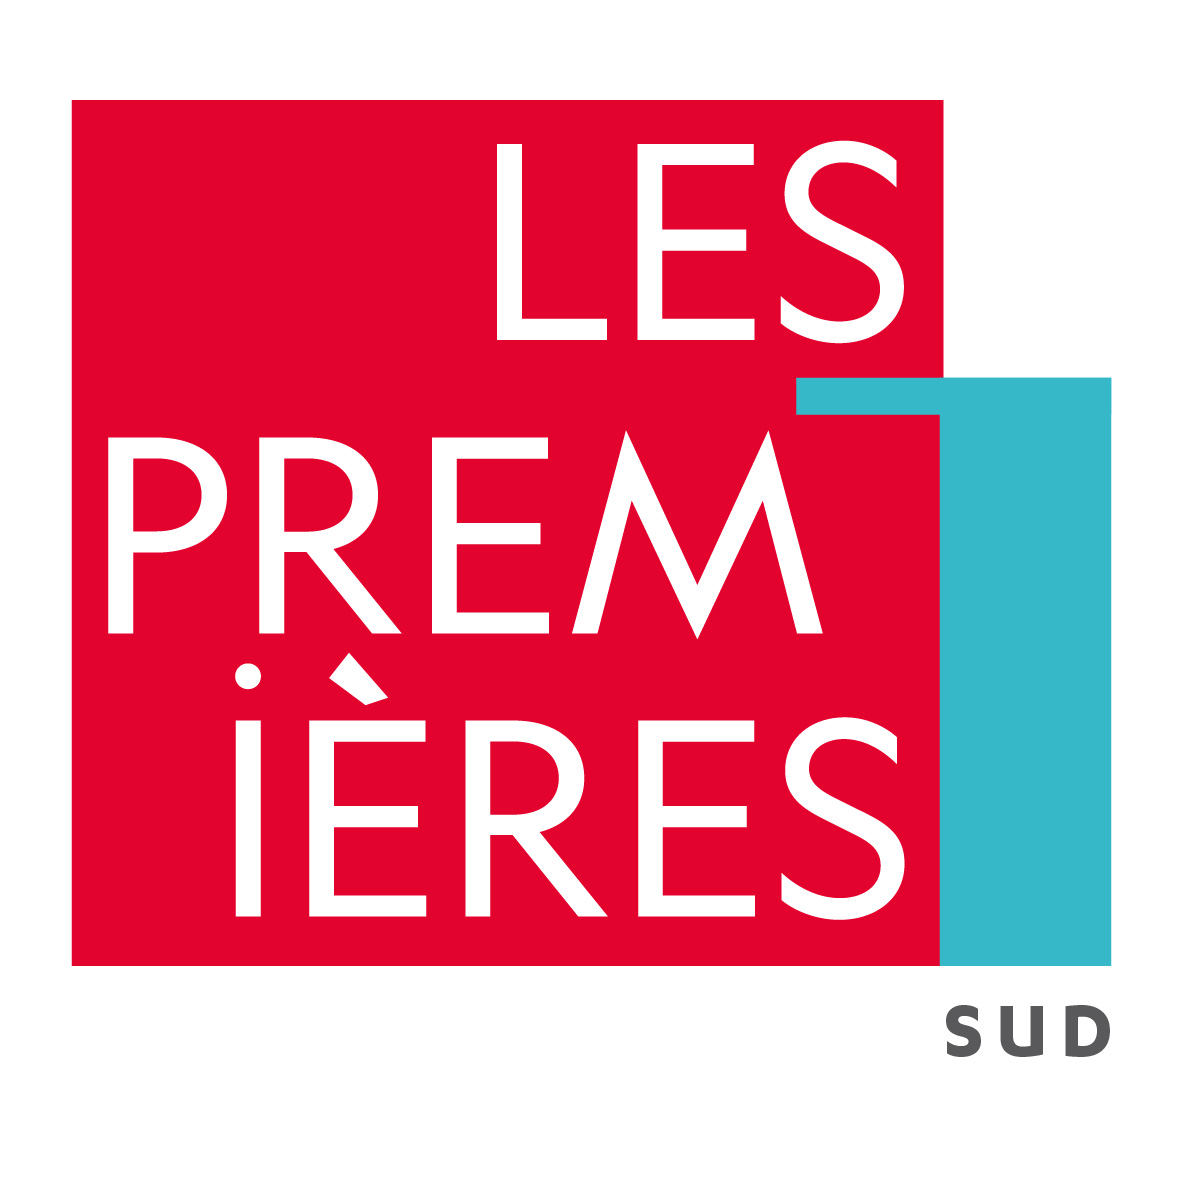 Play by les Premières Sud